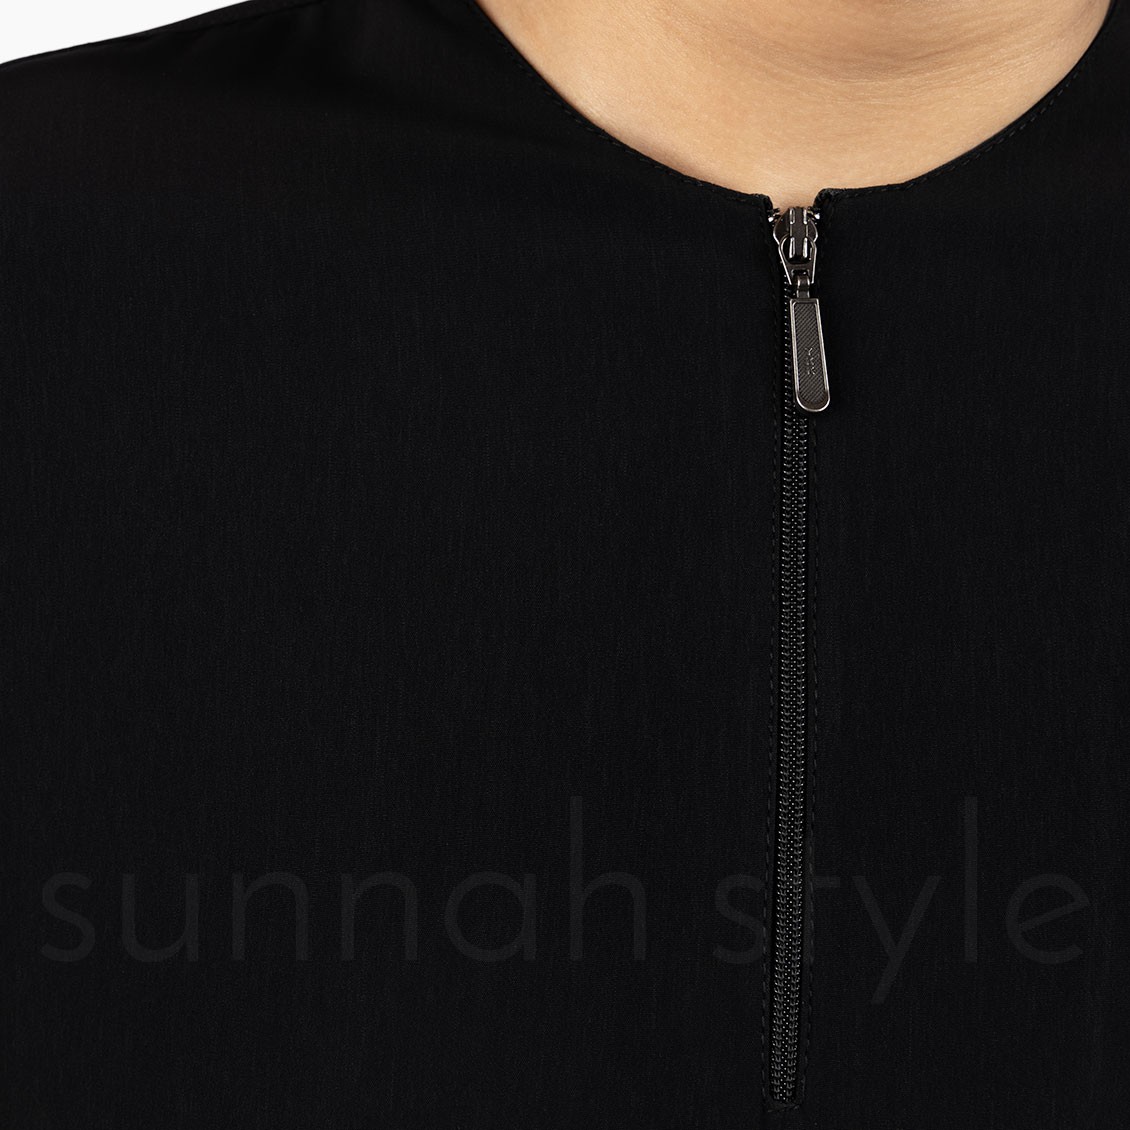 Sunnah Style Boys Child Teen Short Zip Thobe Black